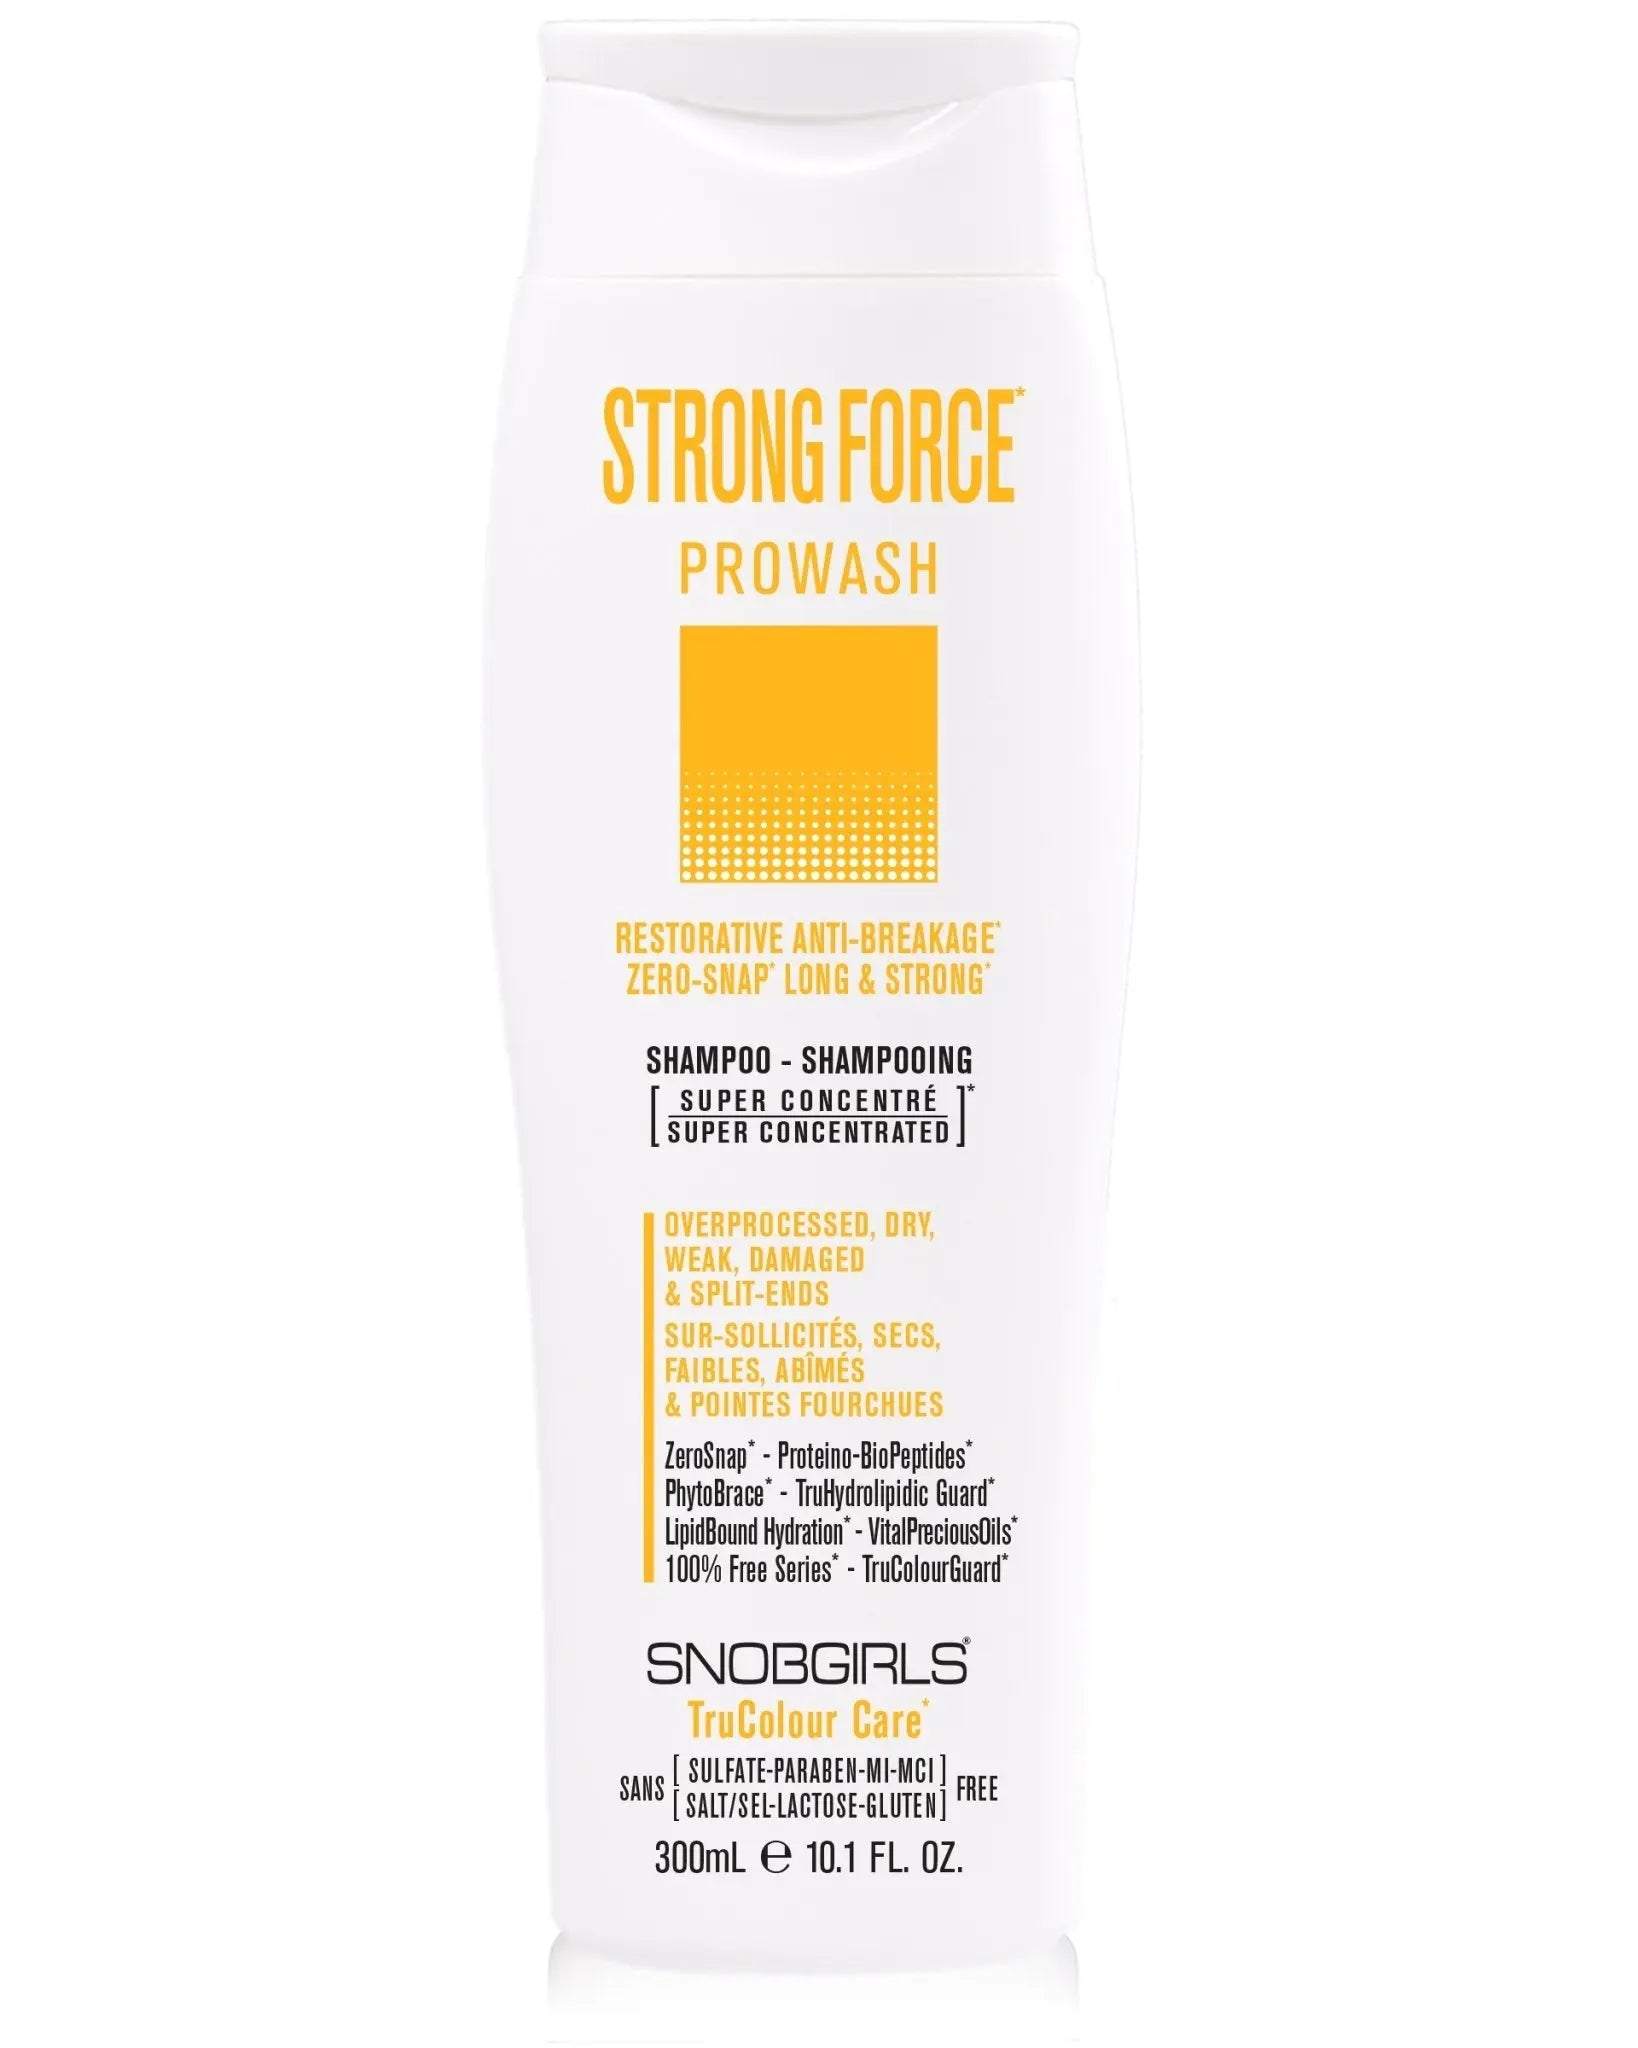 STRONGFORCE Prowash (shampoo) 10.1 FL. OZ. - SNOBGIRLS.com